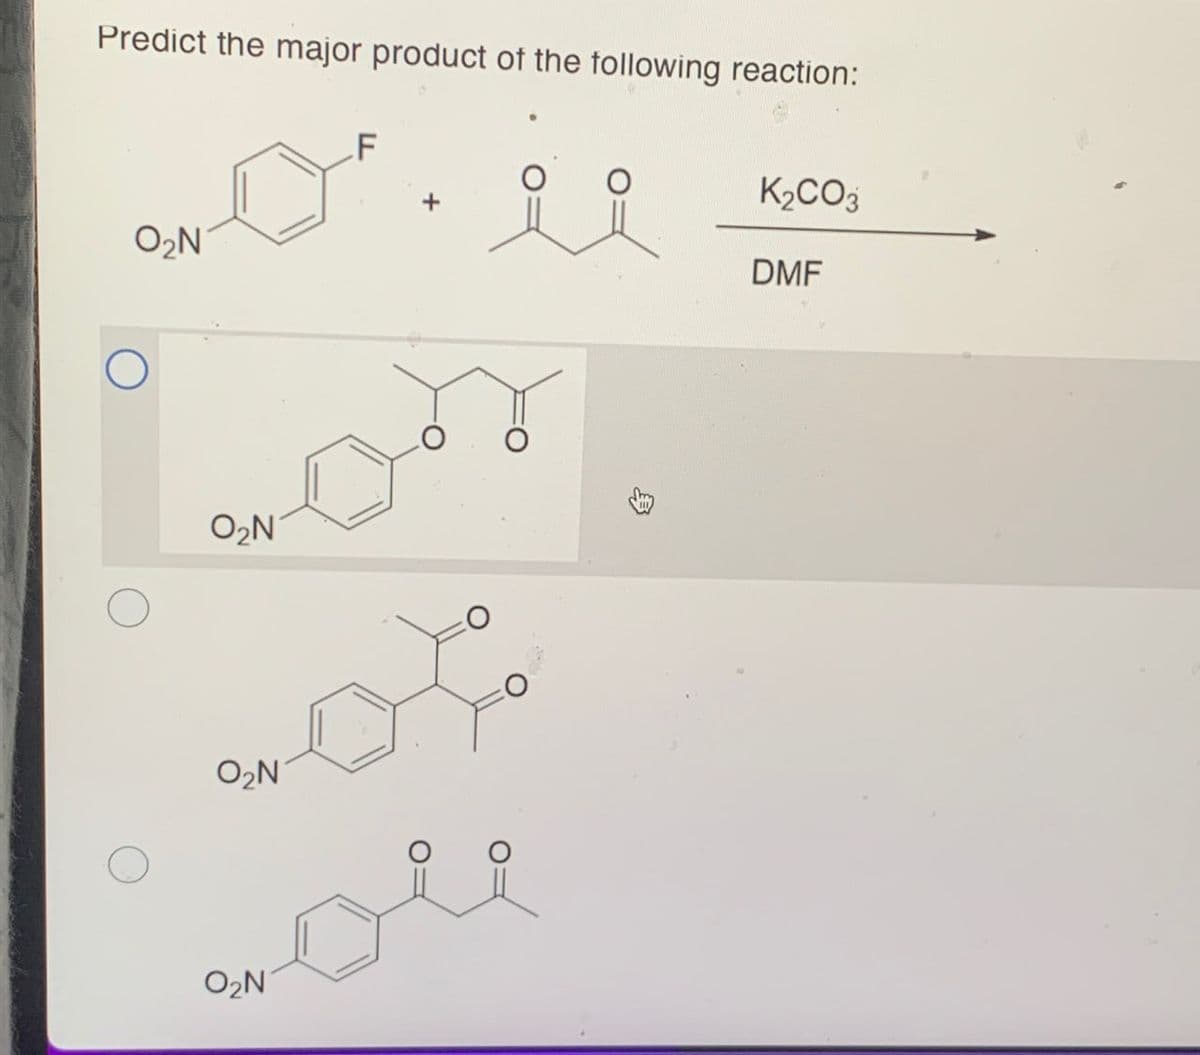 Predict the major product of the following reaction:
F
O₂N
O₂N
O₂N
O₂N
K2CO3
DMF